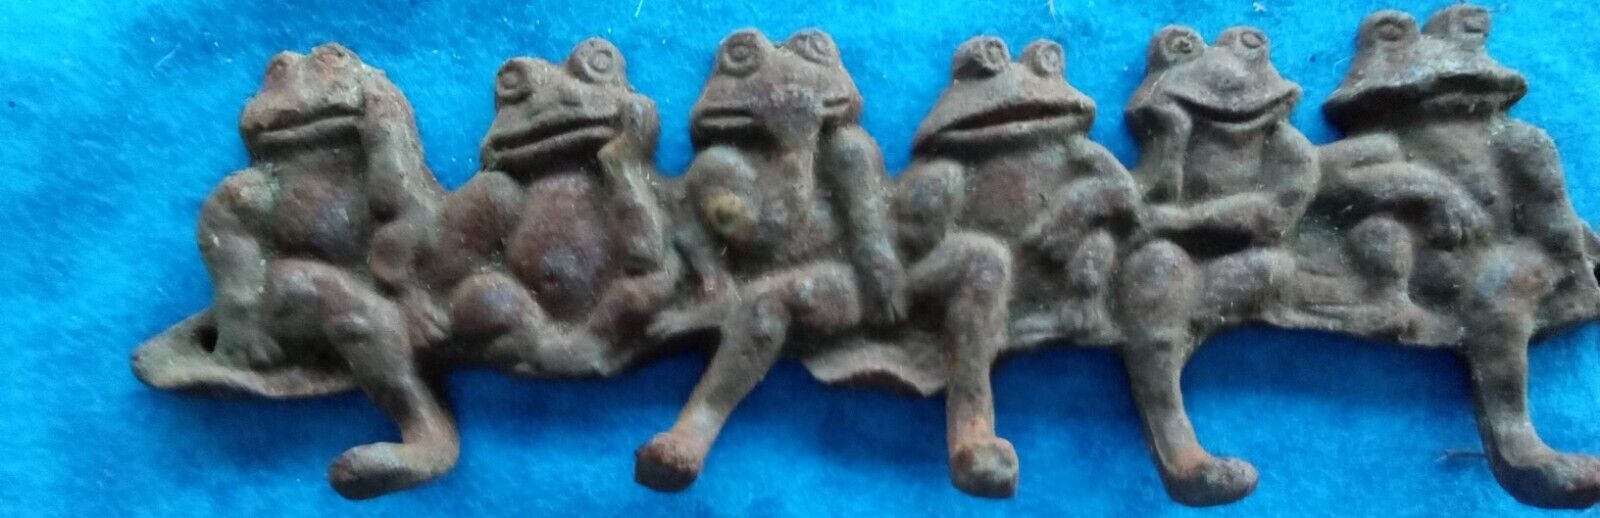 Monkeys (5 )Figurine Hear See Speak Think Look No Evil Cast iron  Antique Rare